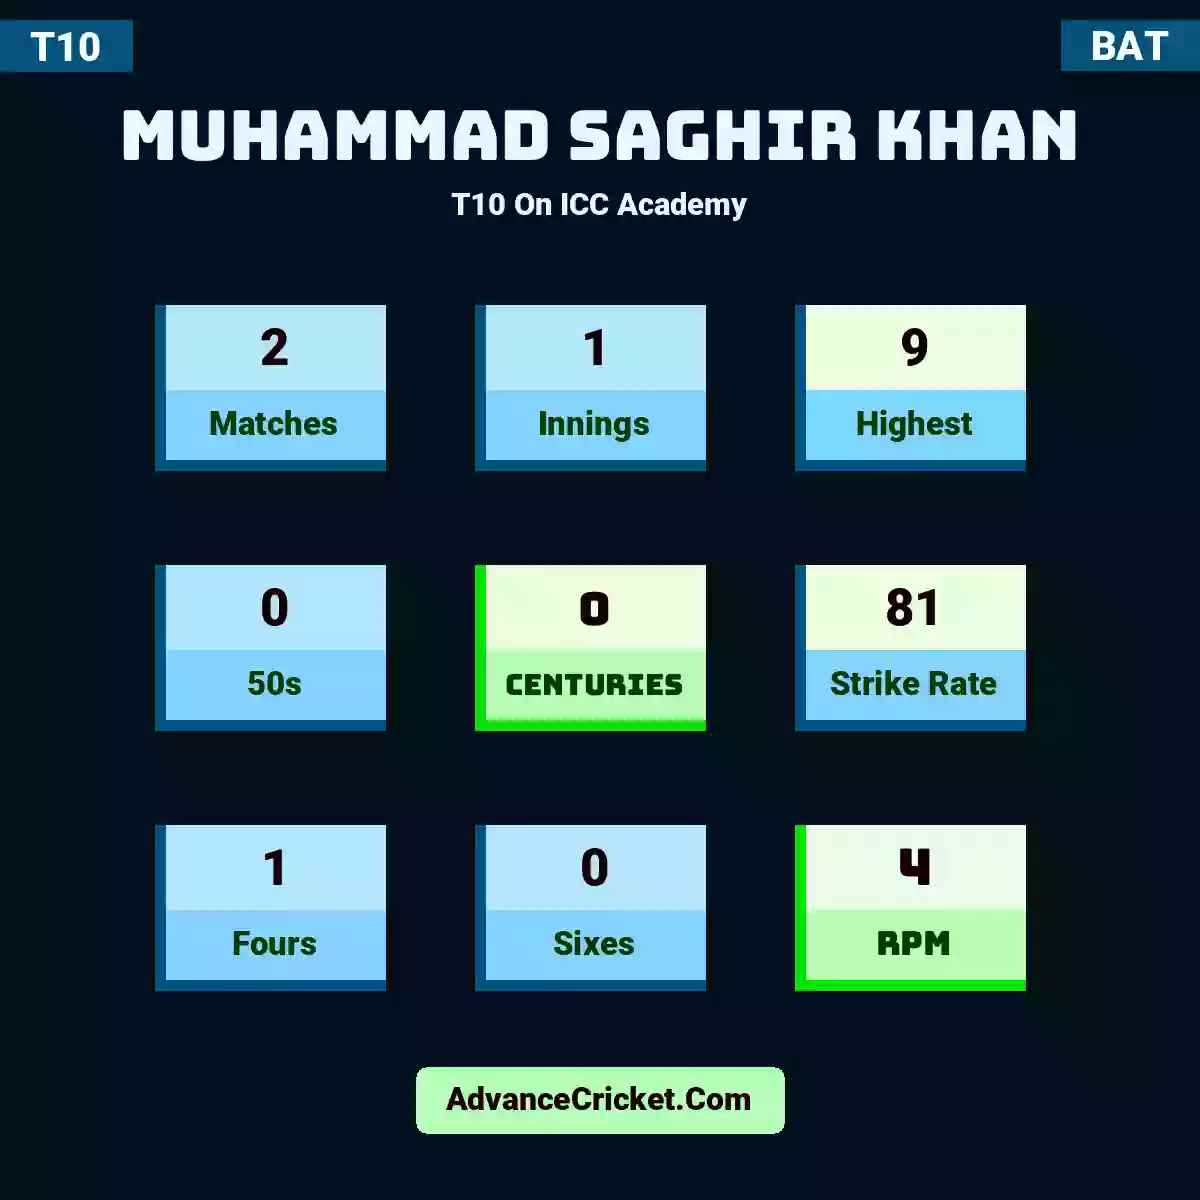 Muhammad Saghir Khan T10  On ICC Academy, Muhammad Saghir Khan played 2 matches, scored 9 runs as highest, 0 half-centuries, and 0 centuries, with a strike rate of 81. M.Saghir.Khan hit 1 fours and 0 sixes, with an RPM of 4.